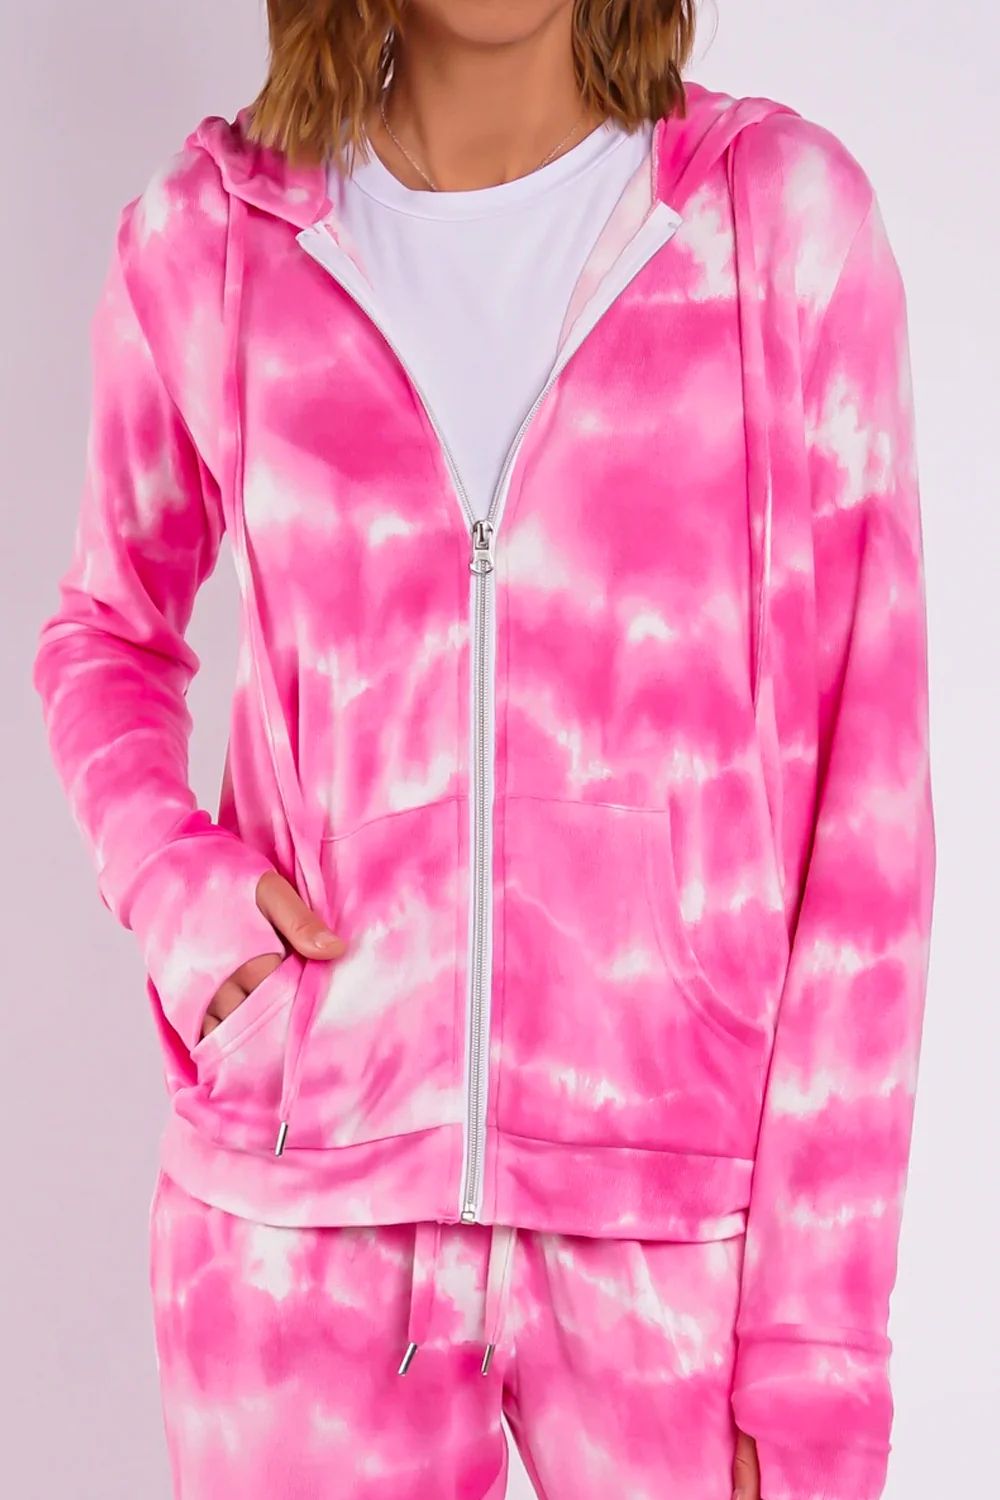 CLOUD ZIP UP - Hot Pink Tie Dye | Los Angeles Trading Co